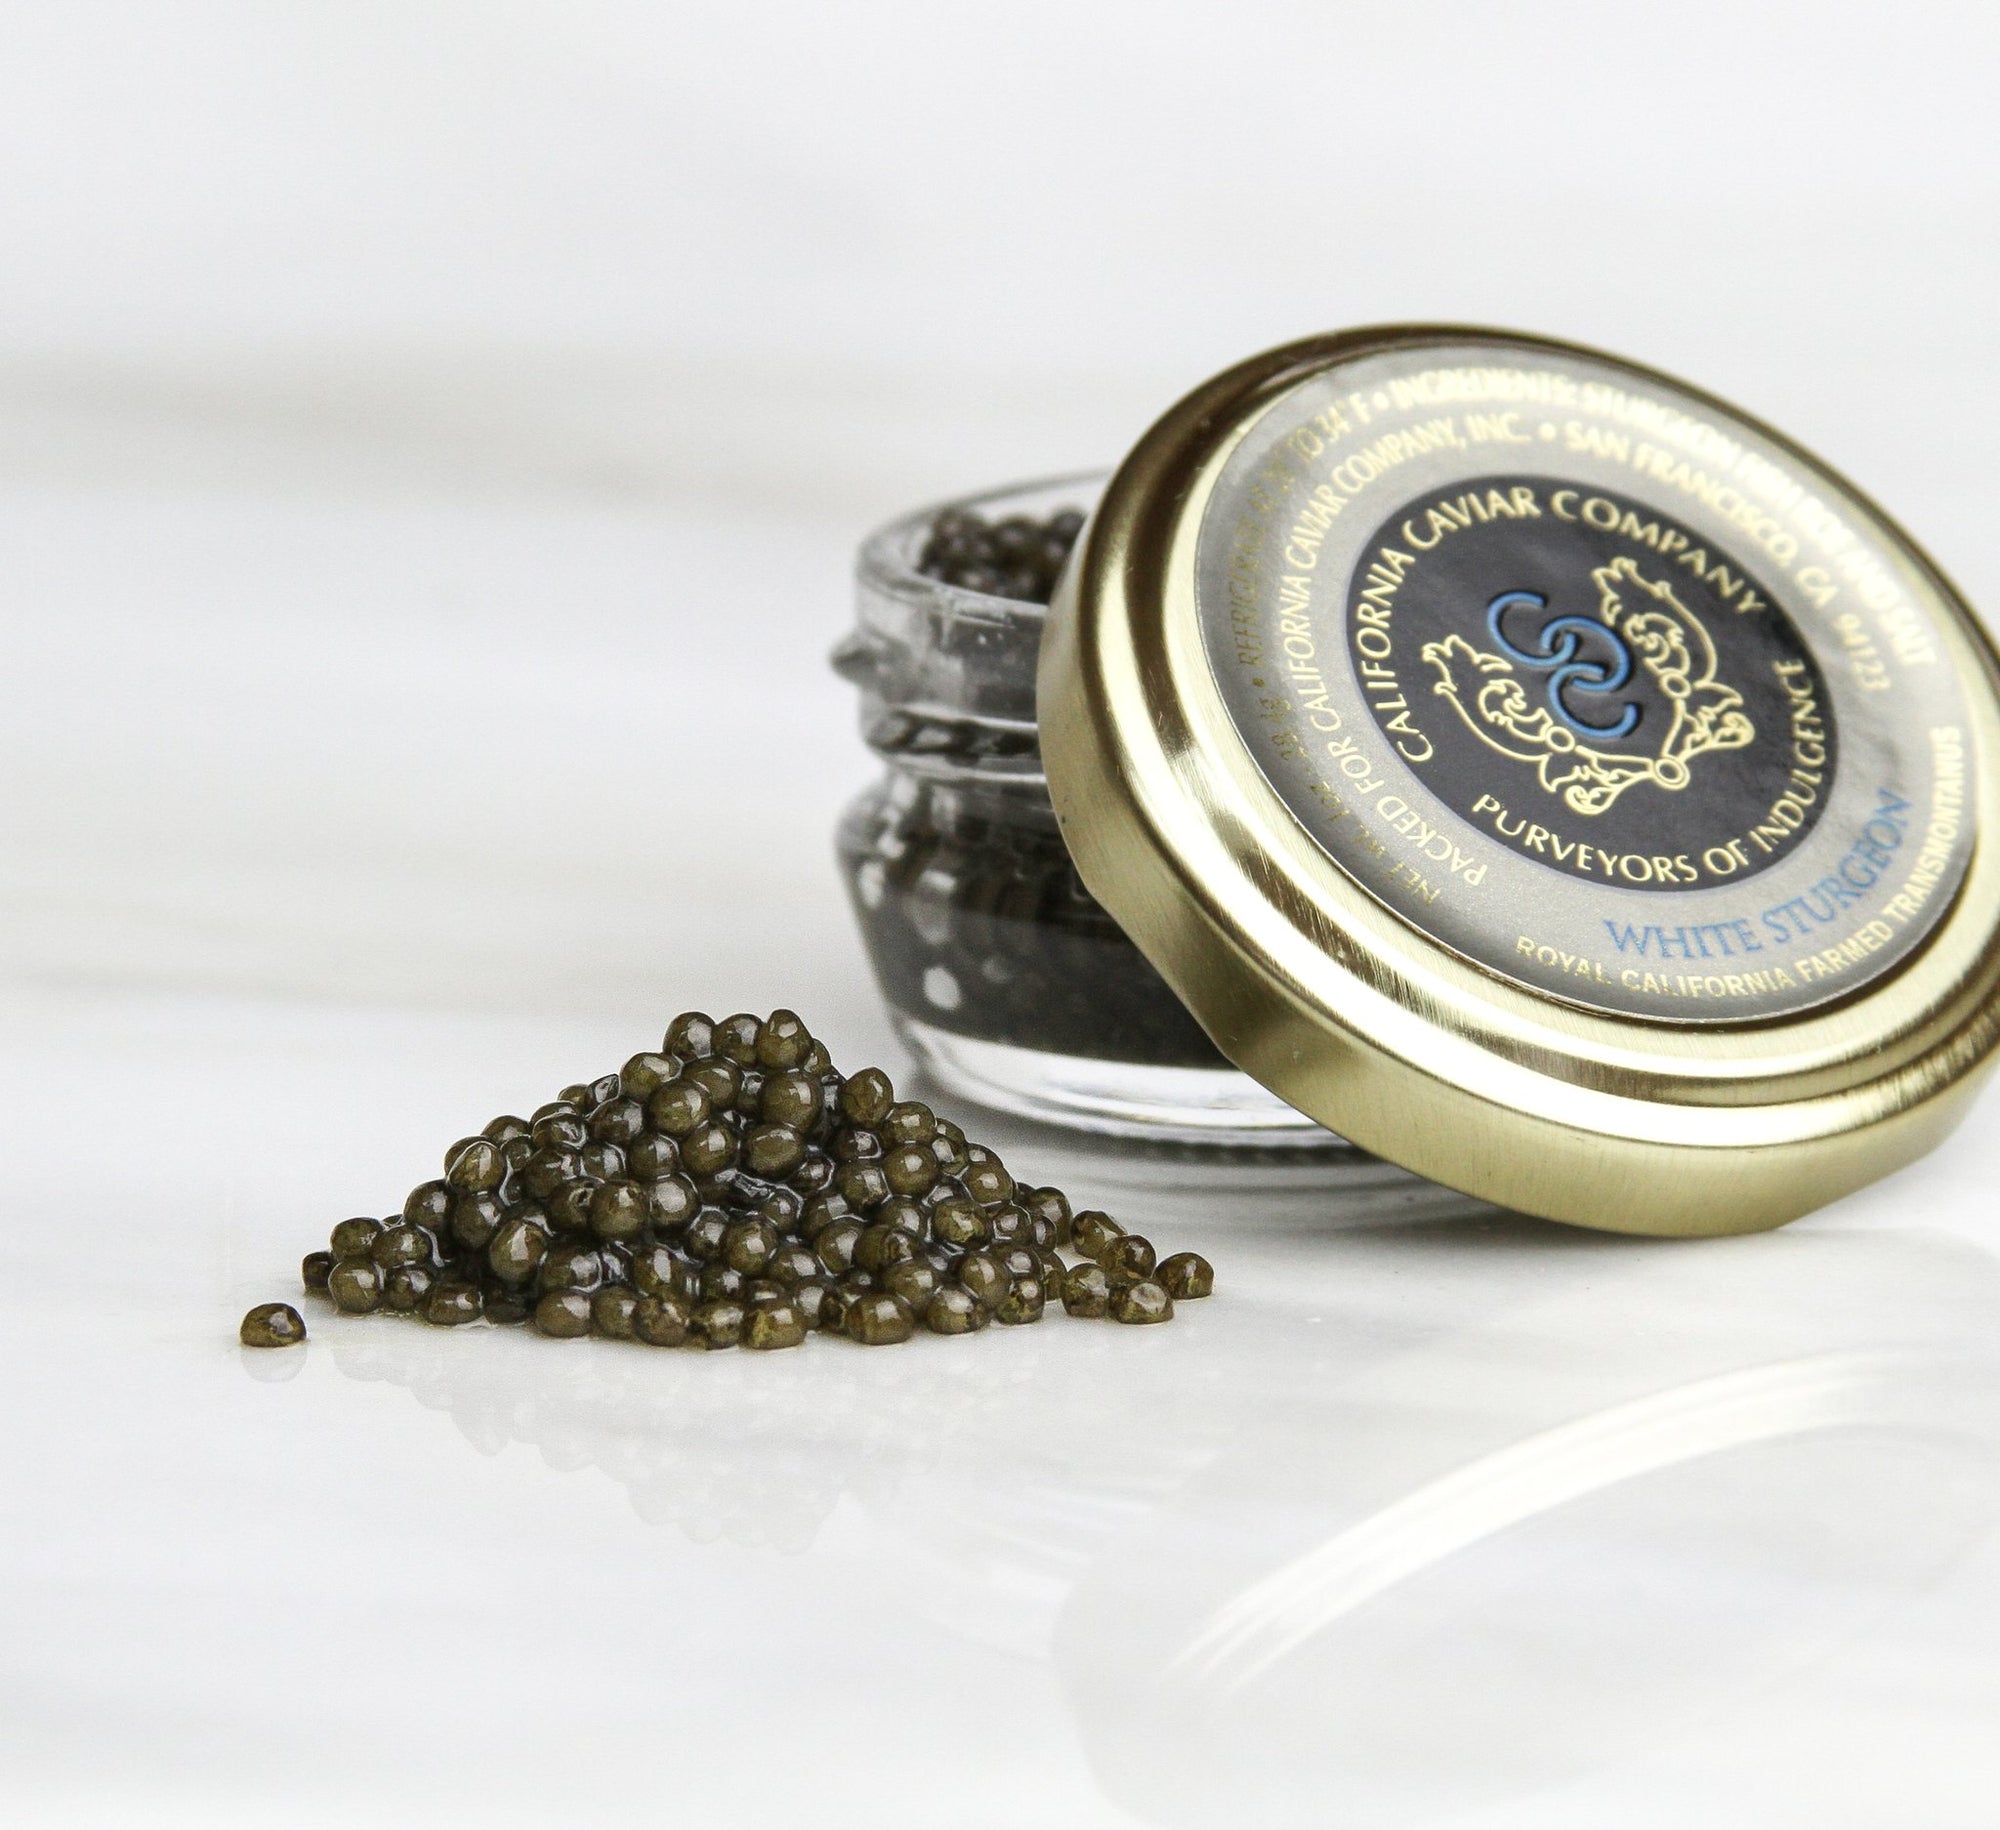 California Caviar Company Royal White California Sturgeon Caviar (1oz)